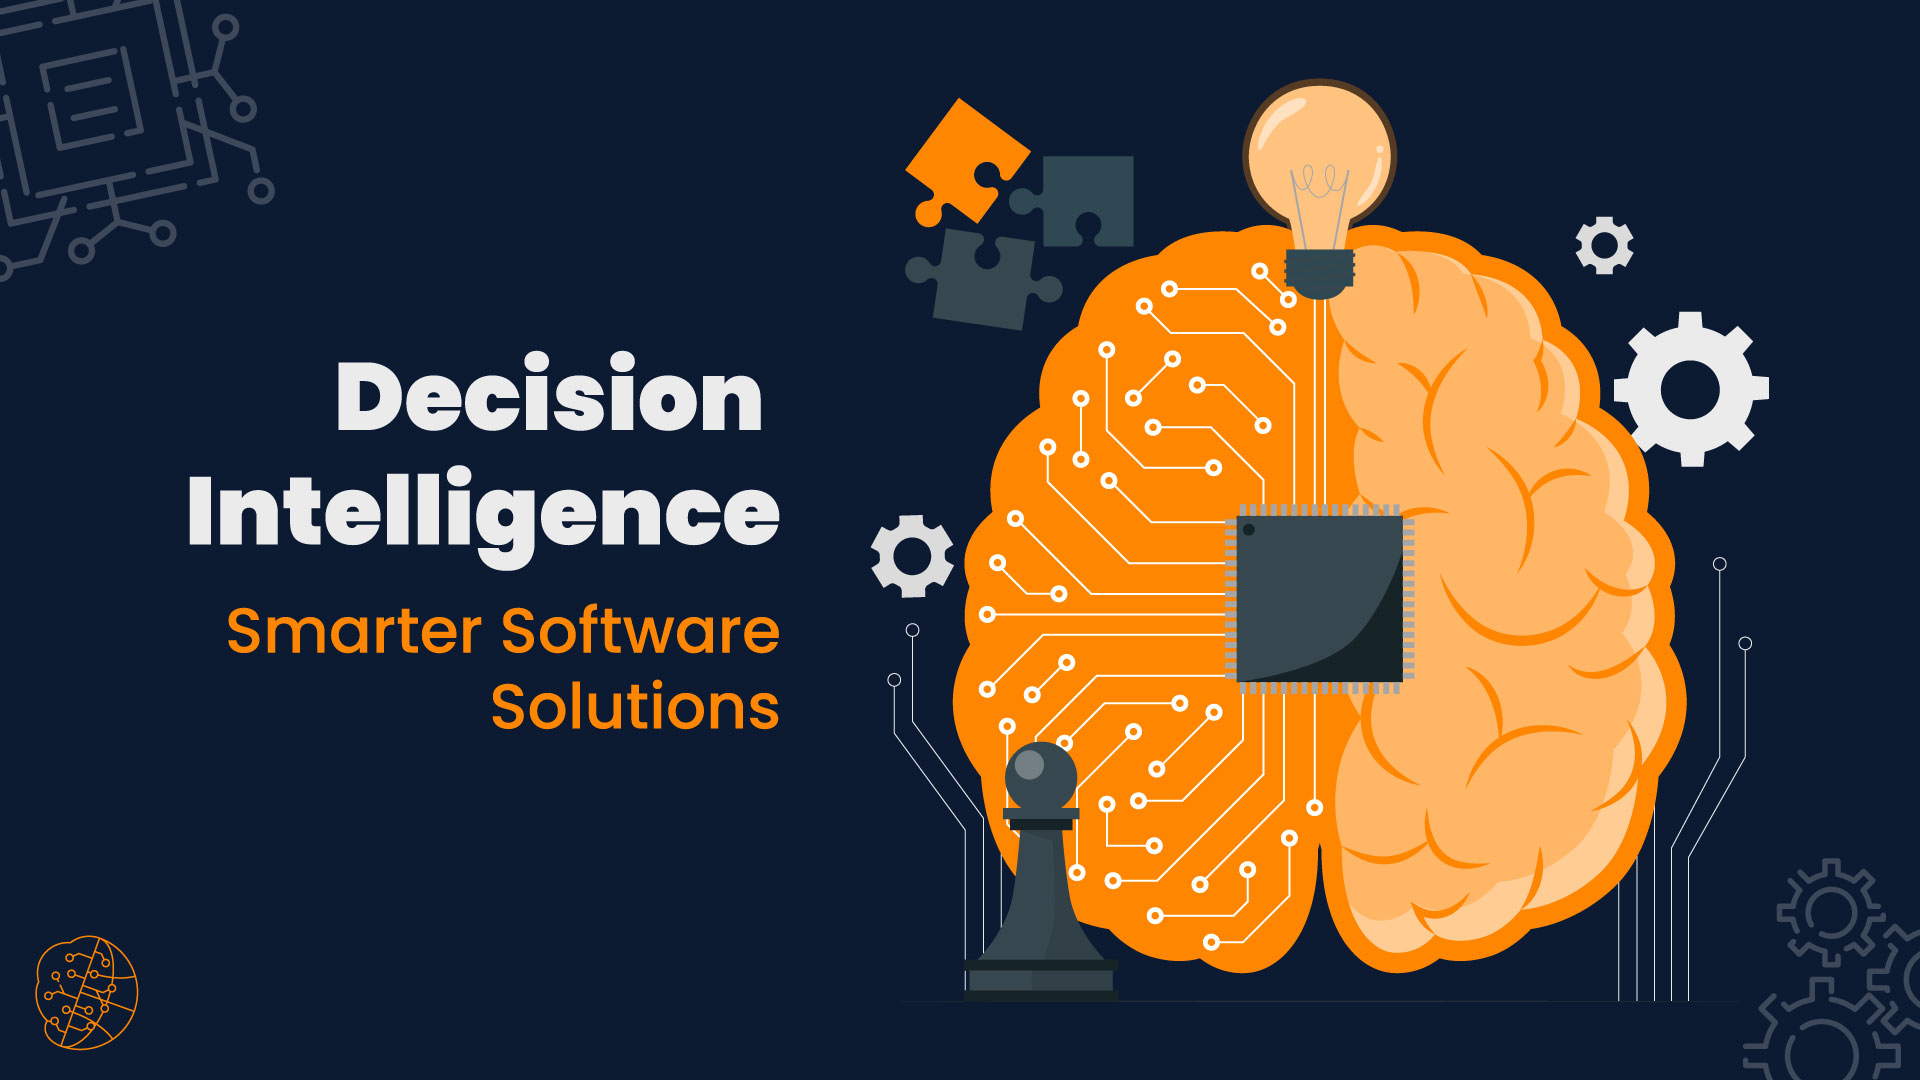 Decision Intelligence: Smarter Software Solutions